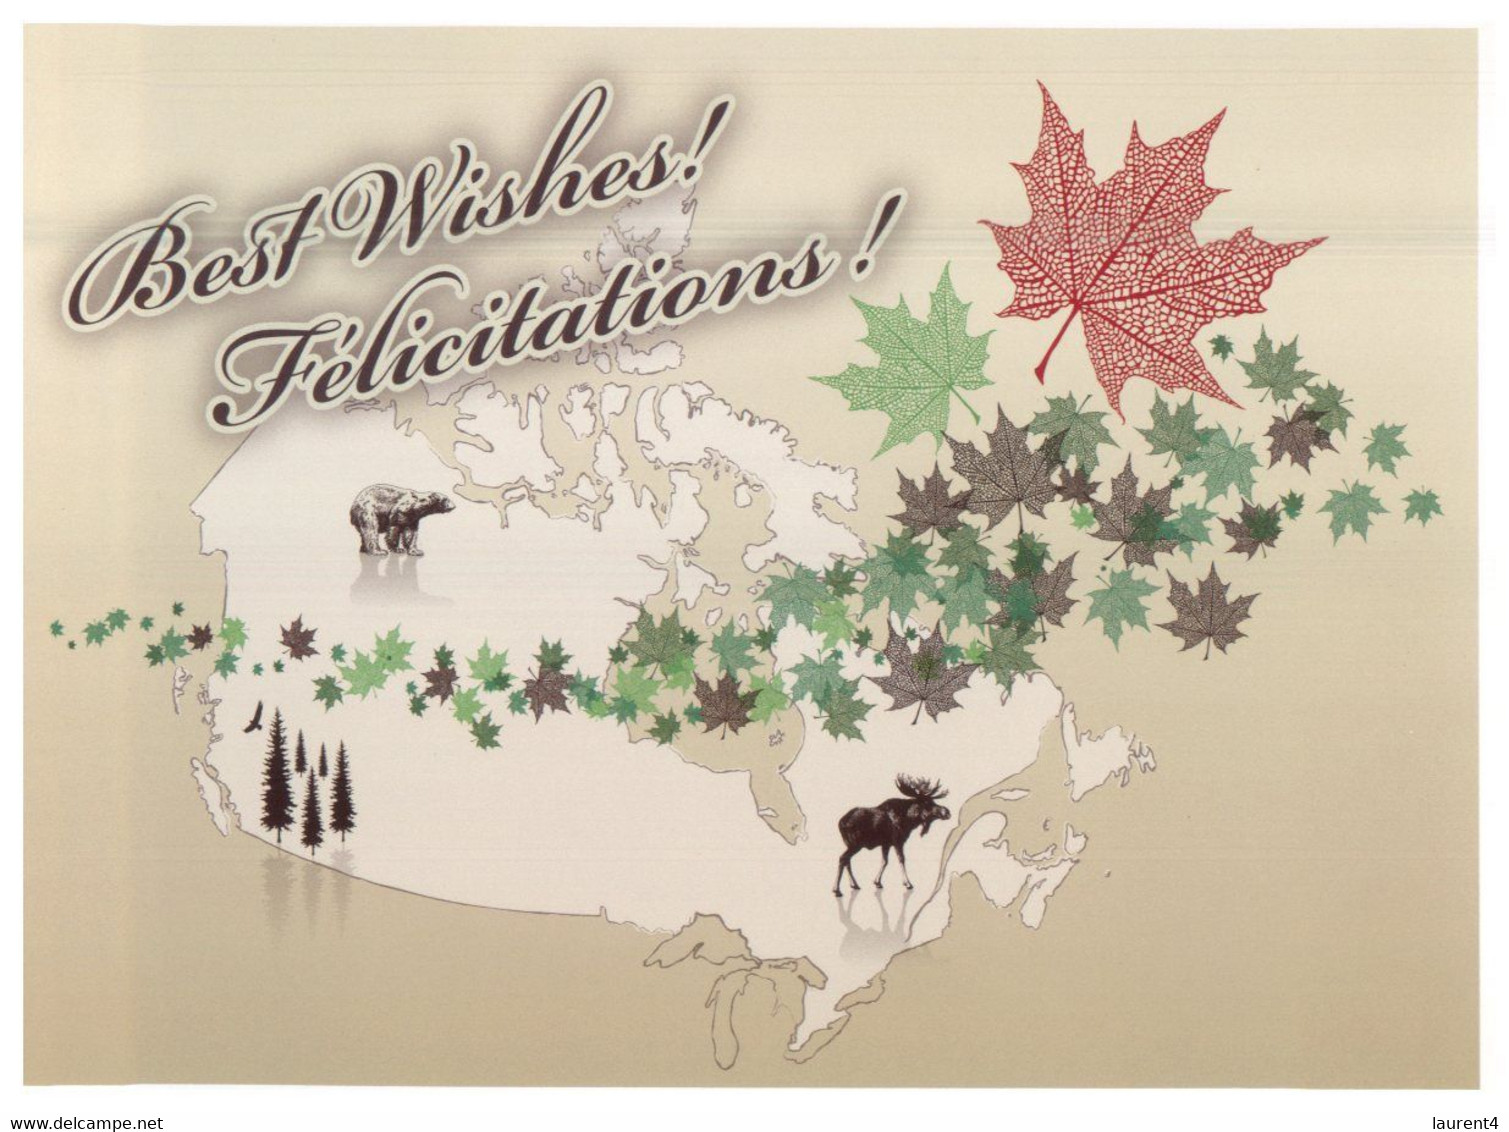 (V 17) Canada - Royal Wedding - presentation keepsake kit (with postcard and mint stamps)